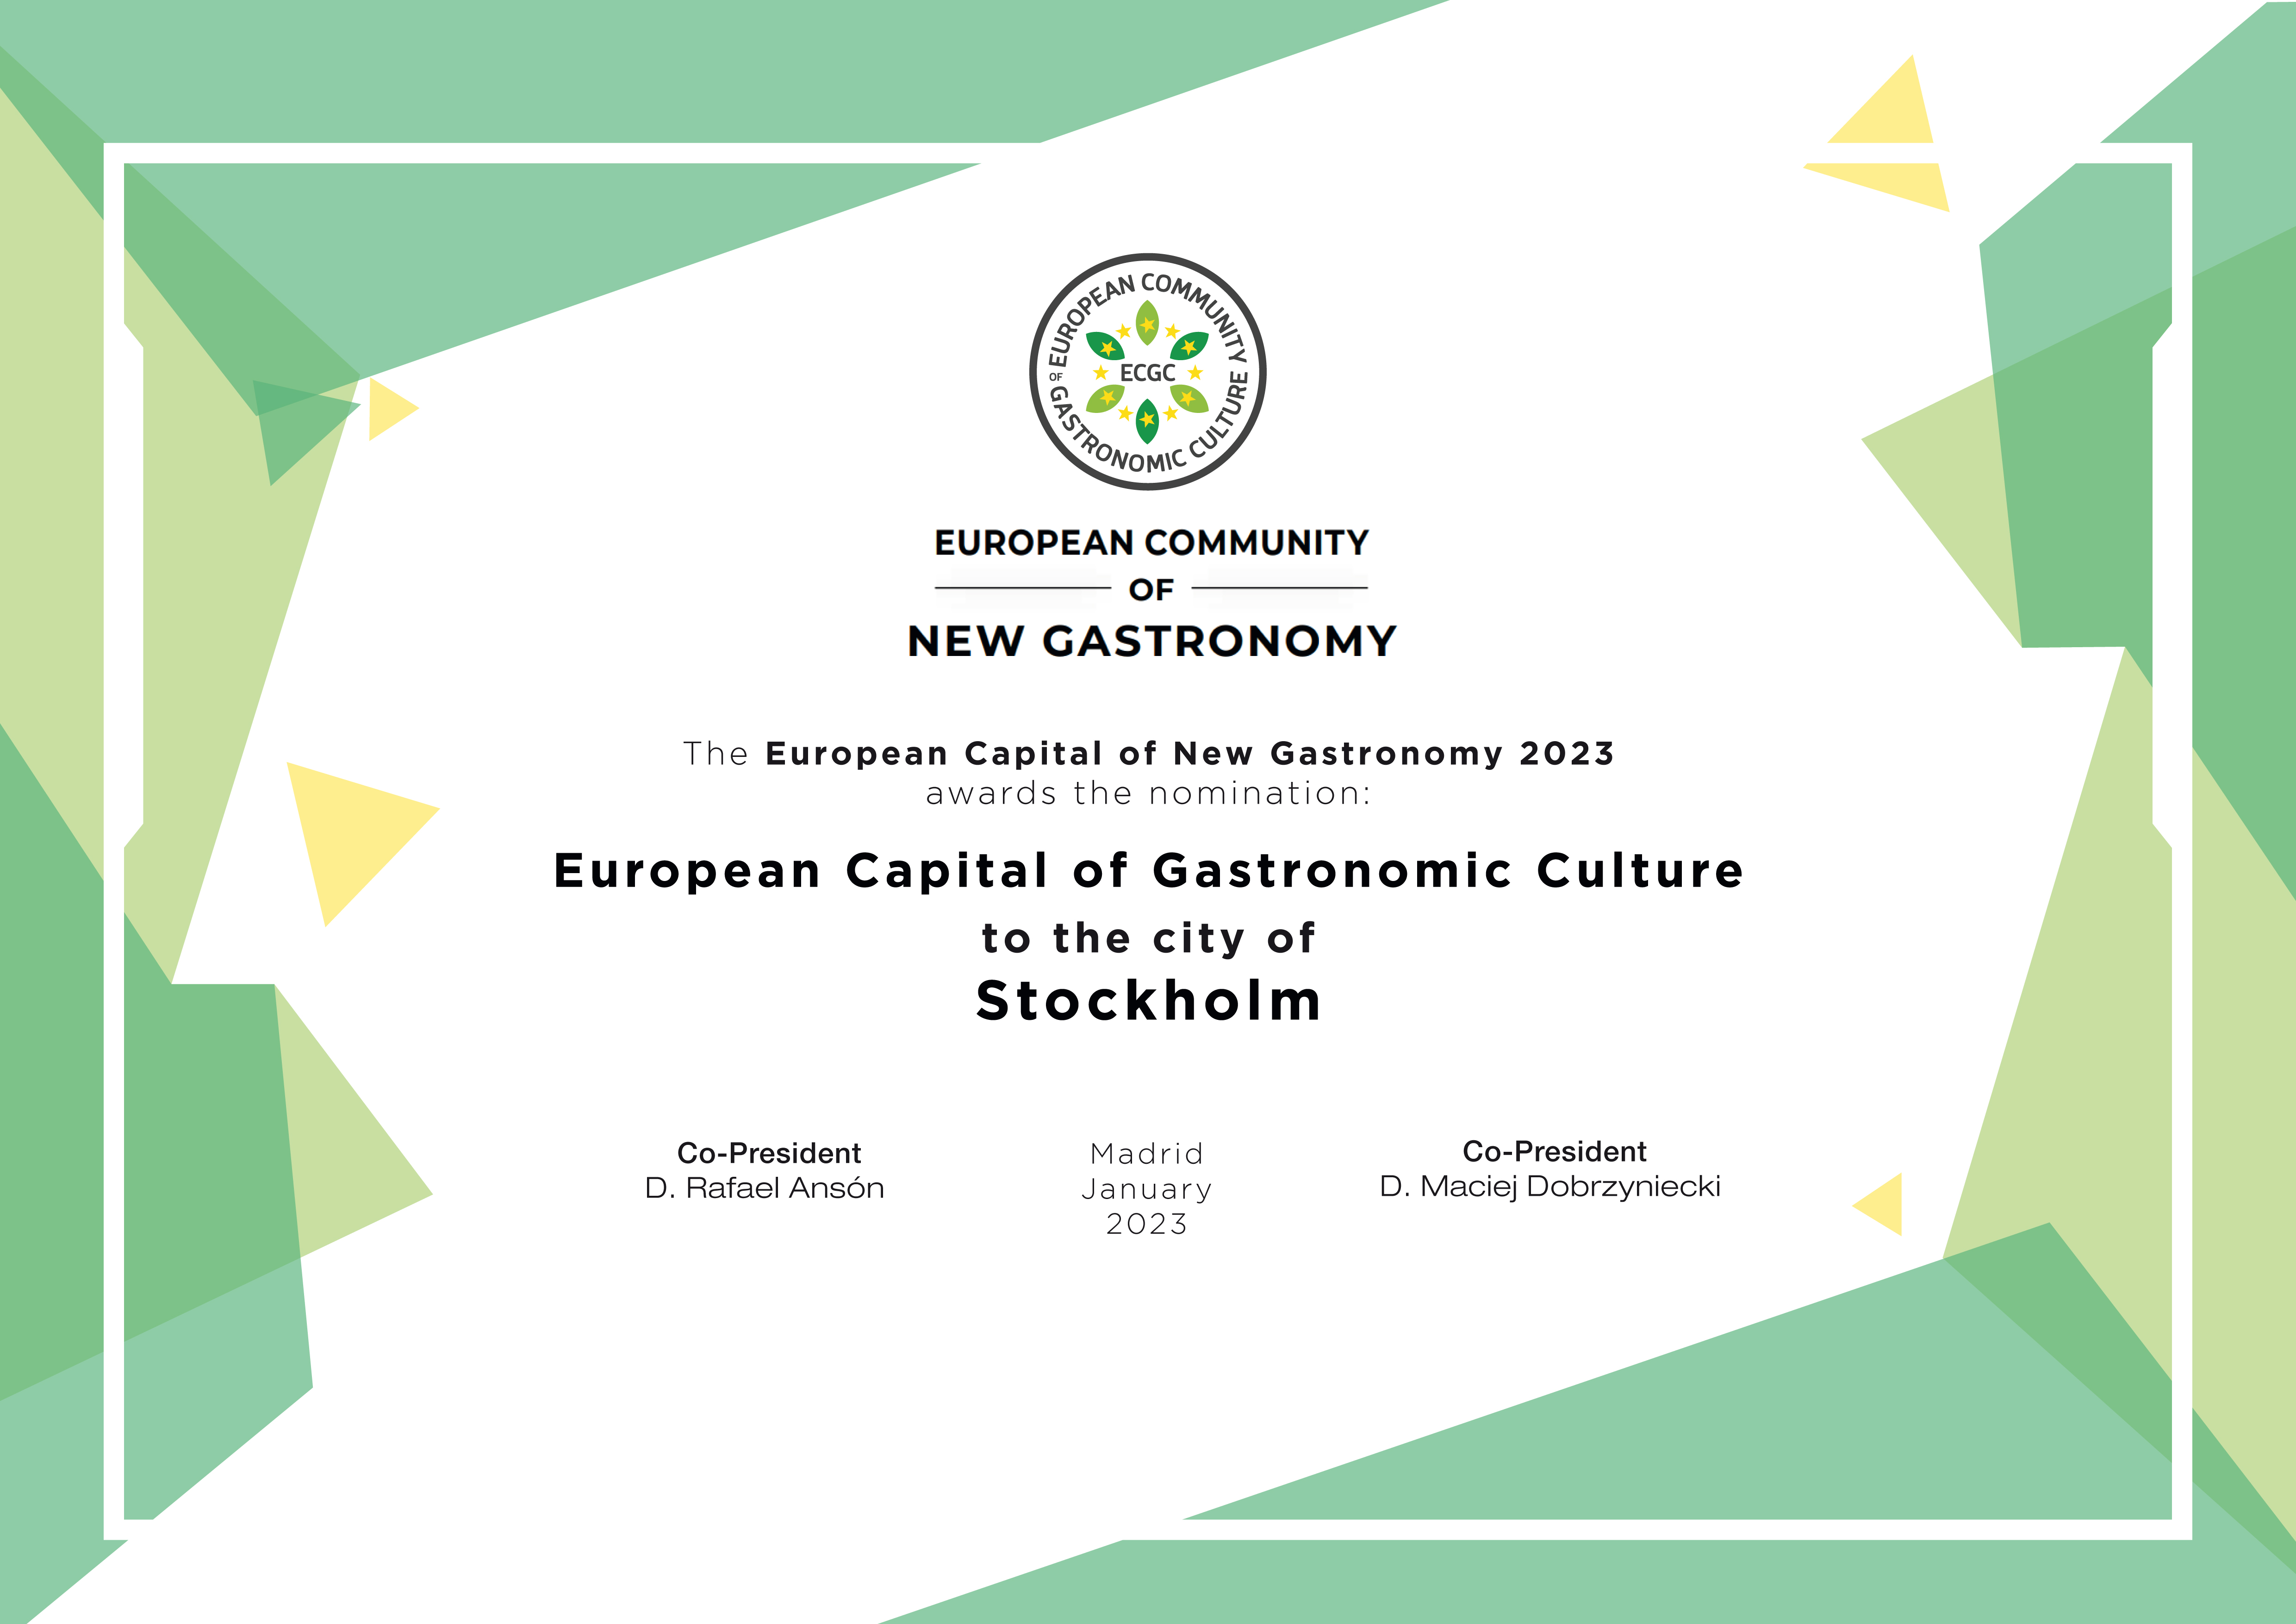 Diploma de “Estocolmo, Capital Europea de la Cultura Gastronómica 2023”.